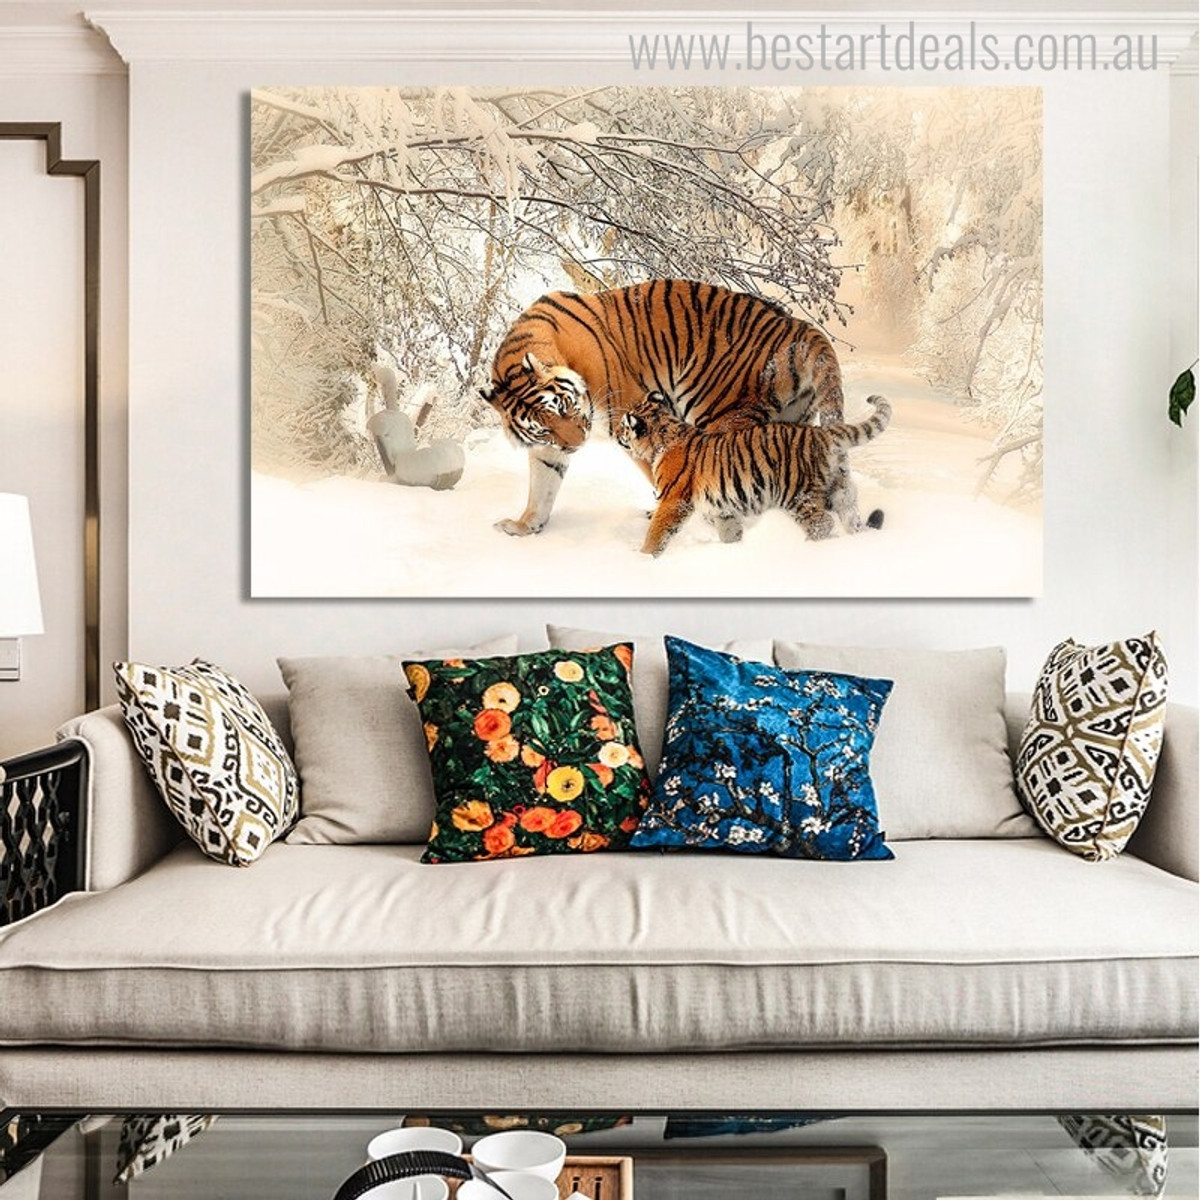 Buy Tigers Canvas Print Wall Art Decor.